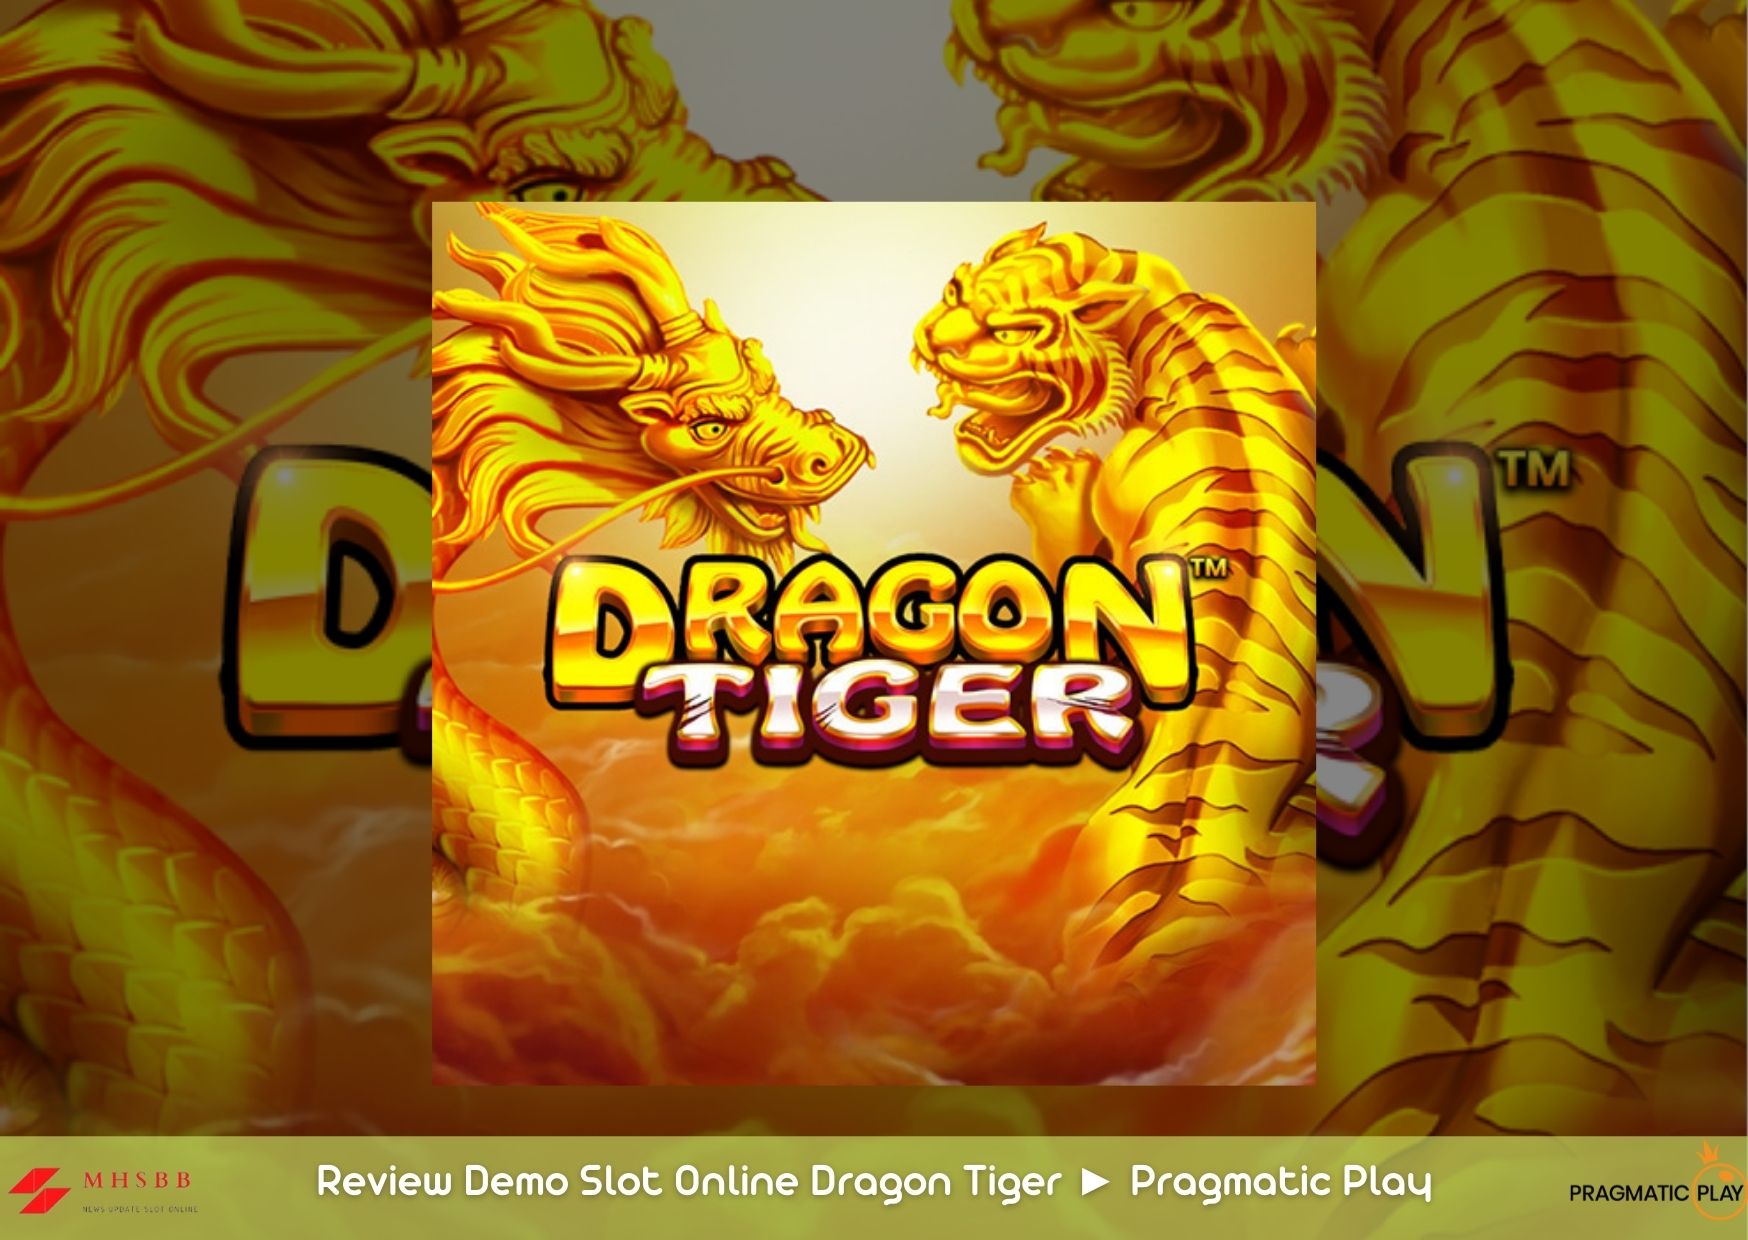 Review Demo Slot Online Dragon Tiger ► Pragmatic Play